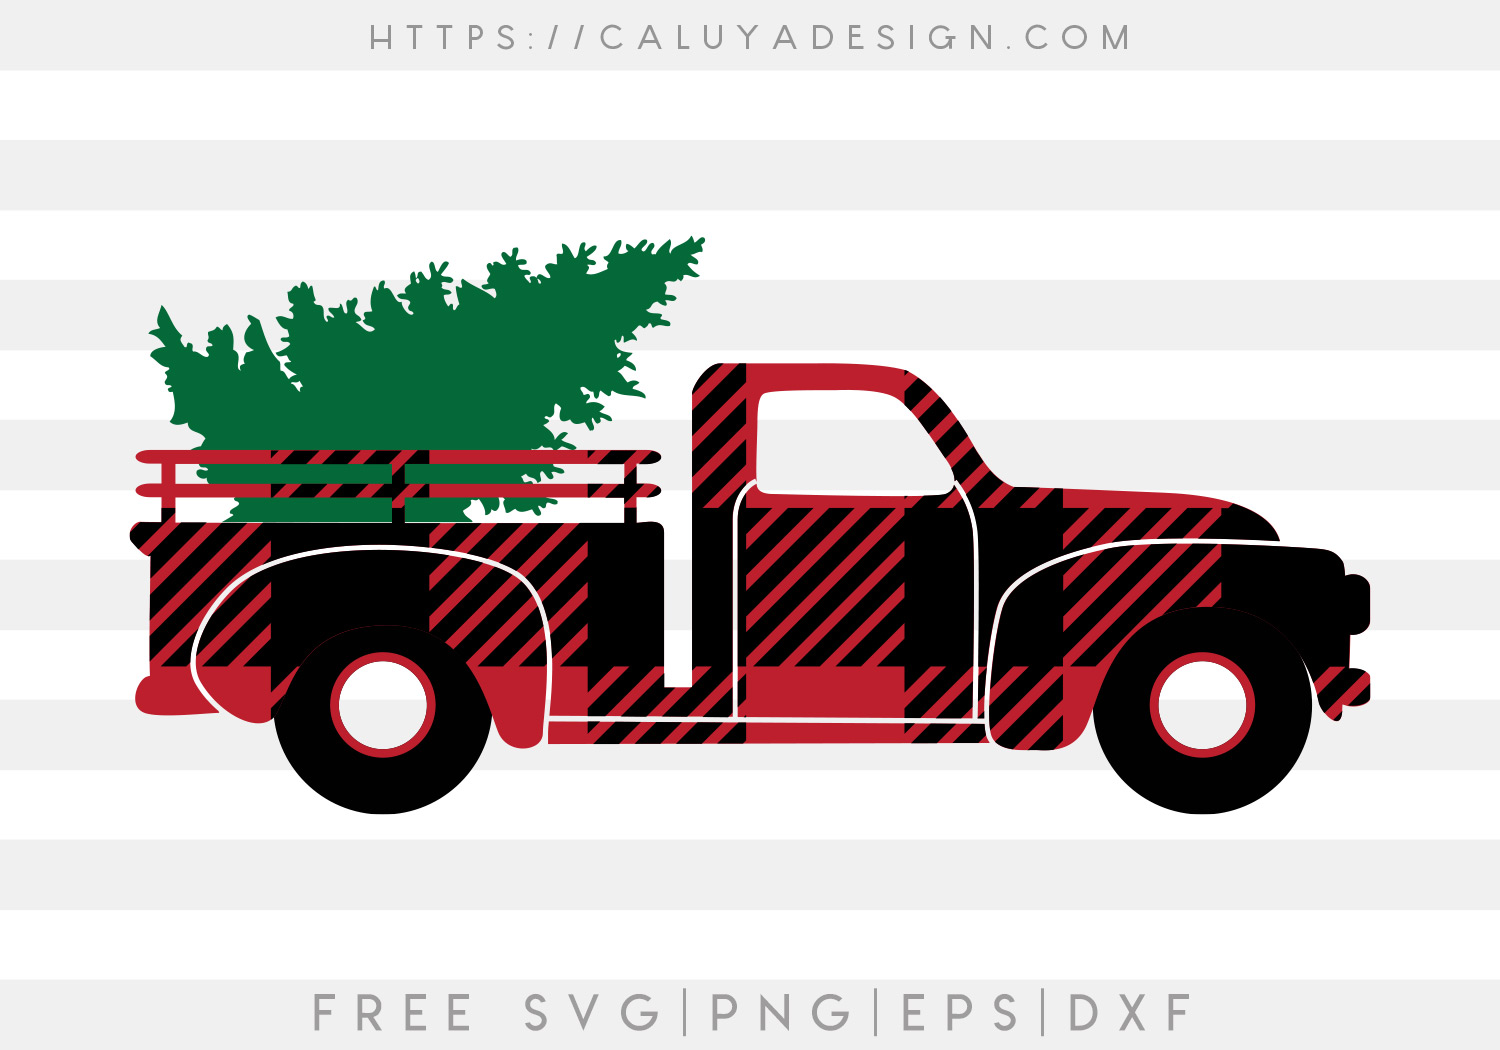 Download Free Plaid Vintage Truck Svg Png Eps Dxf By Caluya Design